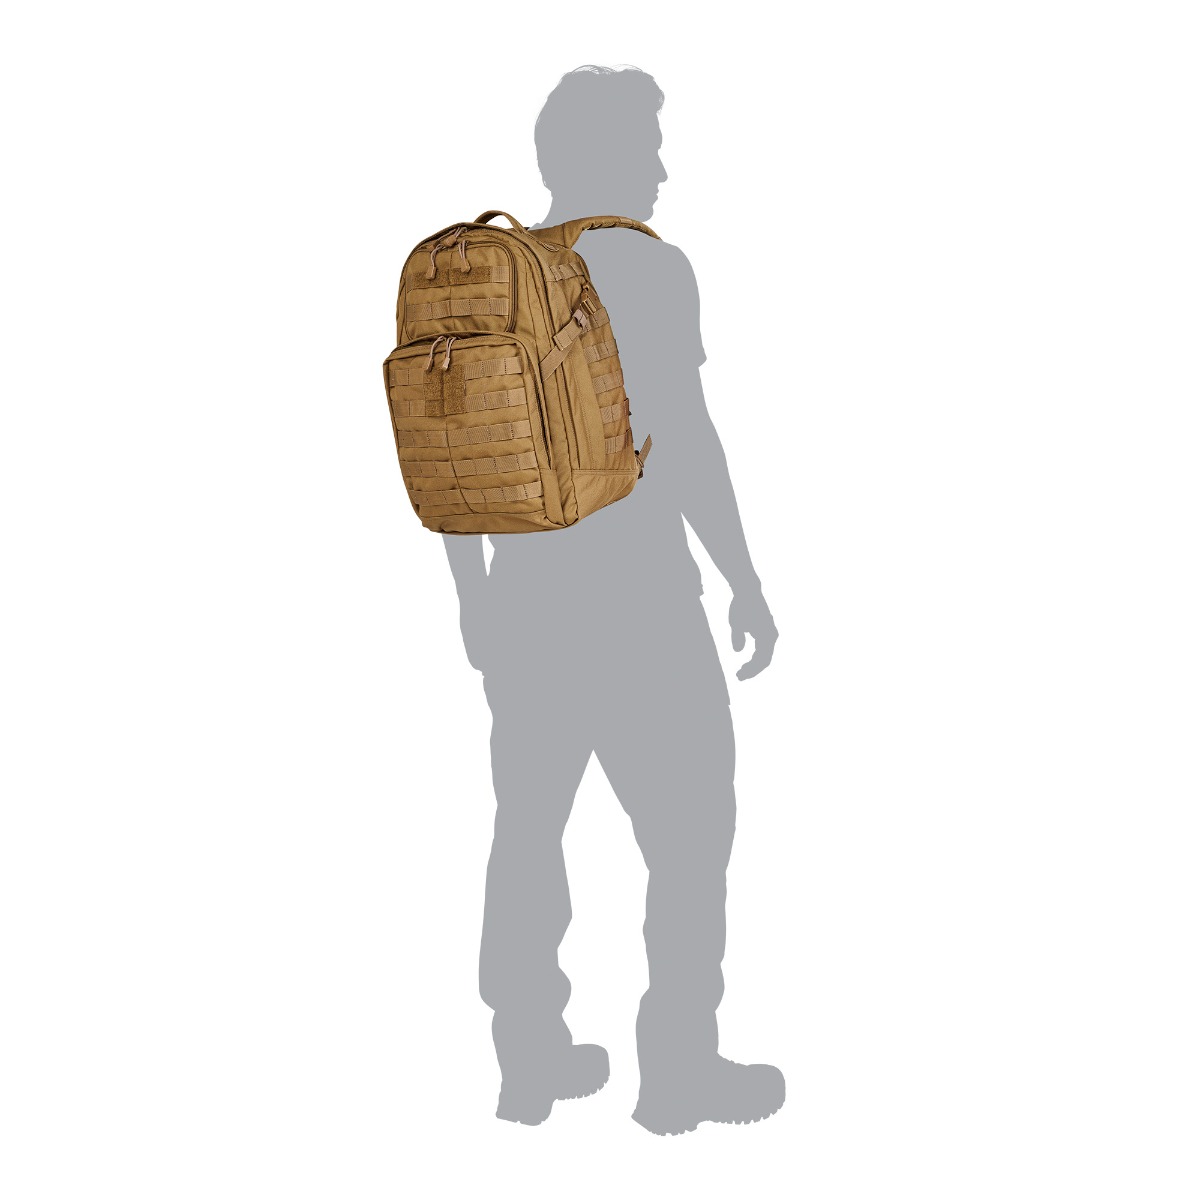 5.11 RUSH 24 2.0 Backpack